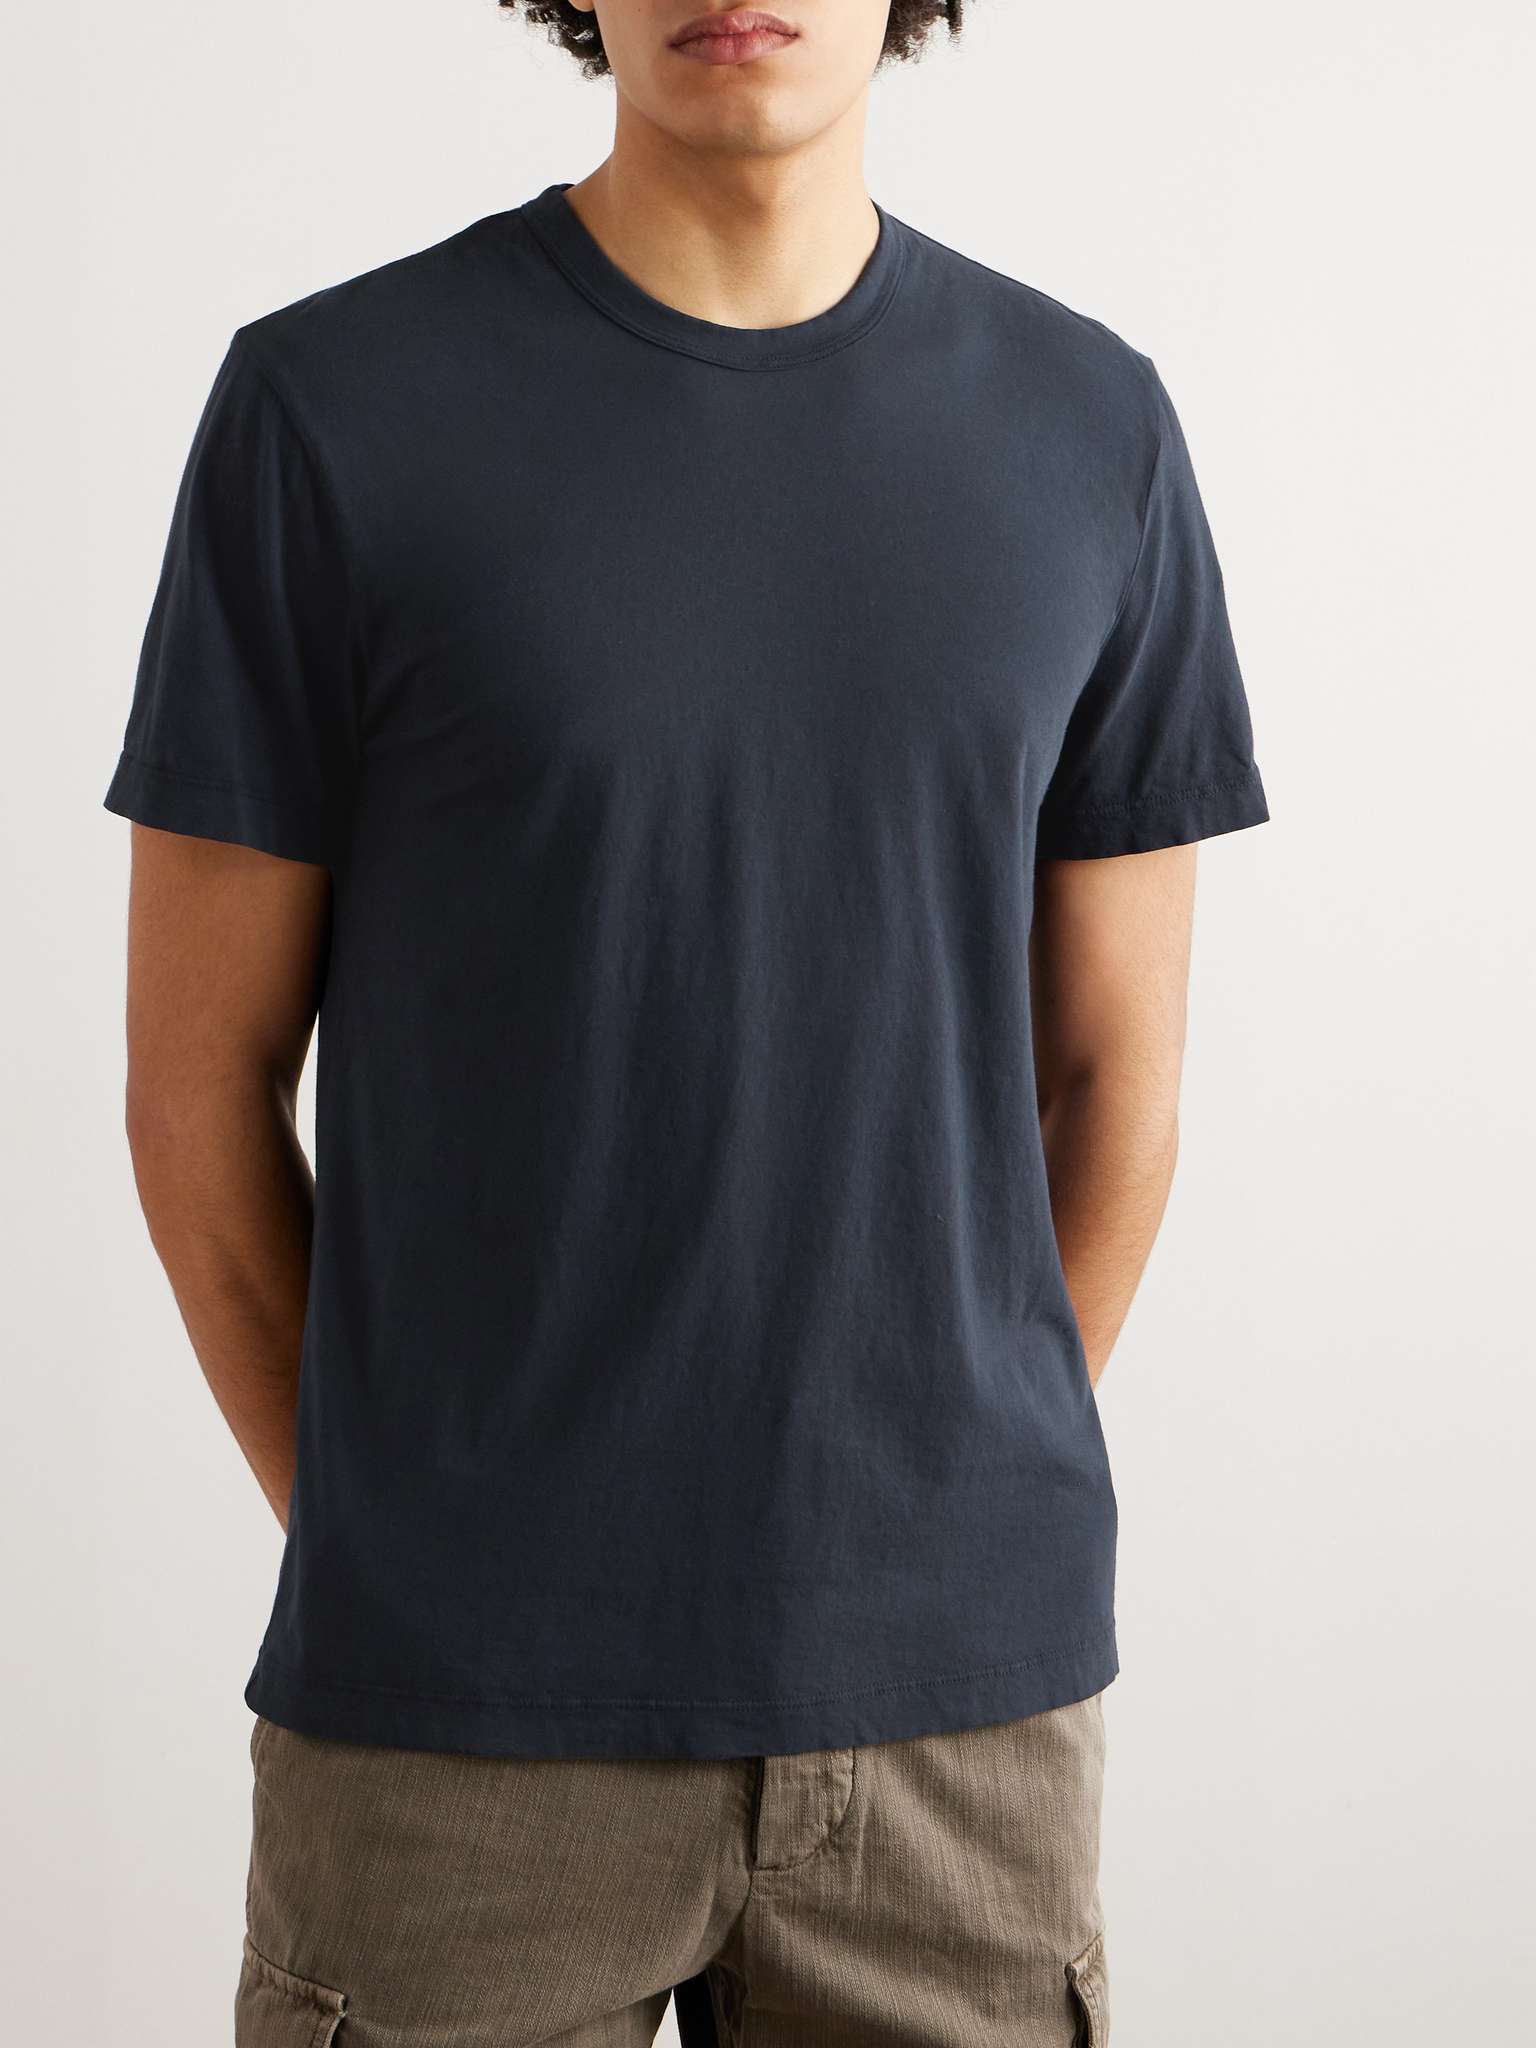 JAMES PERSE Cotton-Jersey T-Shirt for Men | MR PORTER